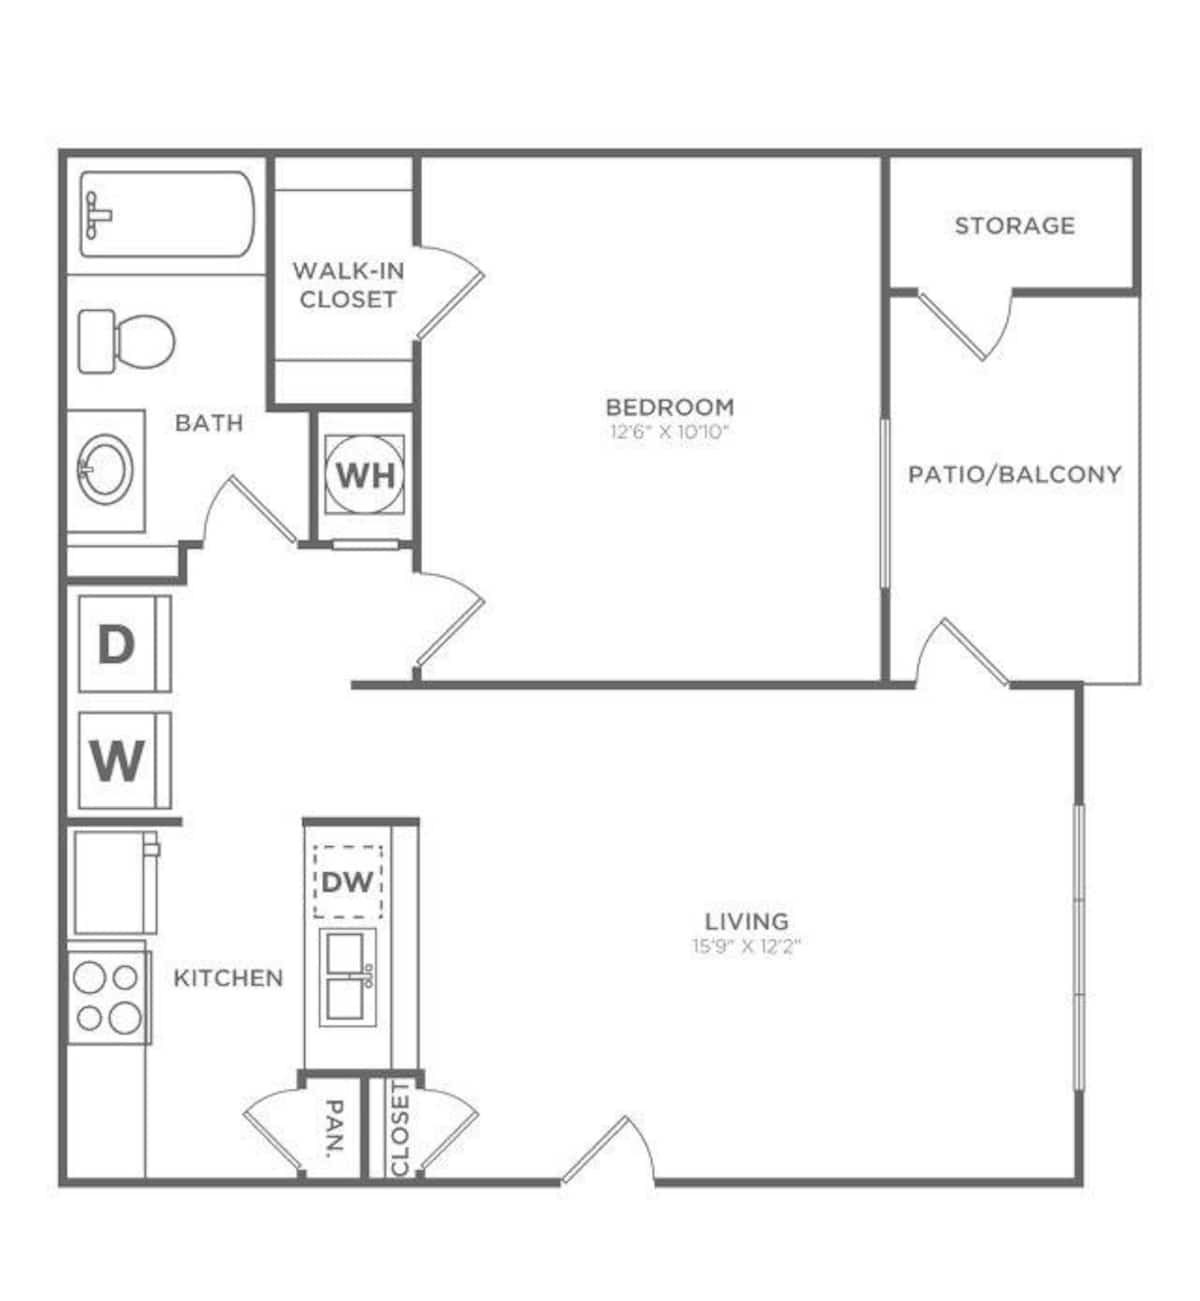 Floorplan diagram for One Bedroom One Bath (705 SF), showing 1 bedroom